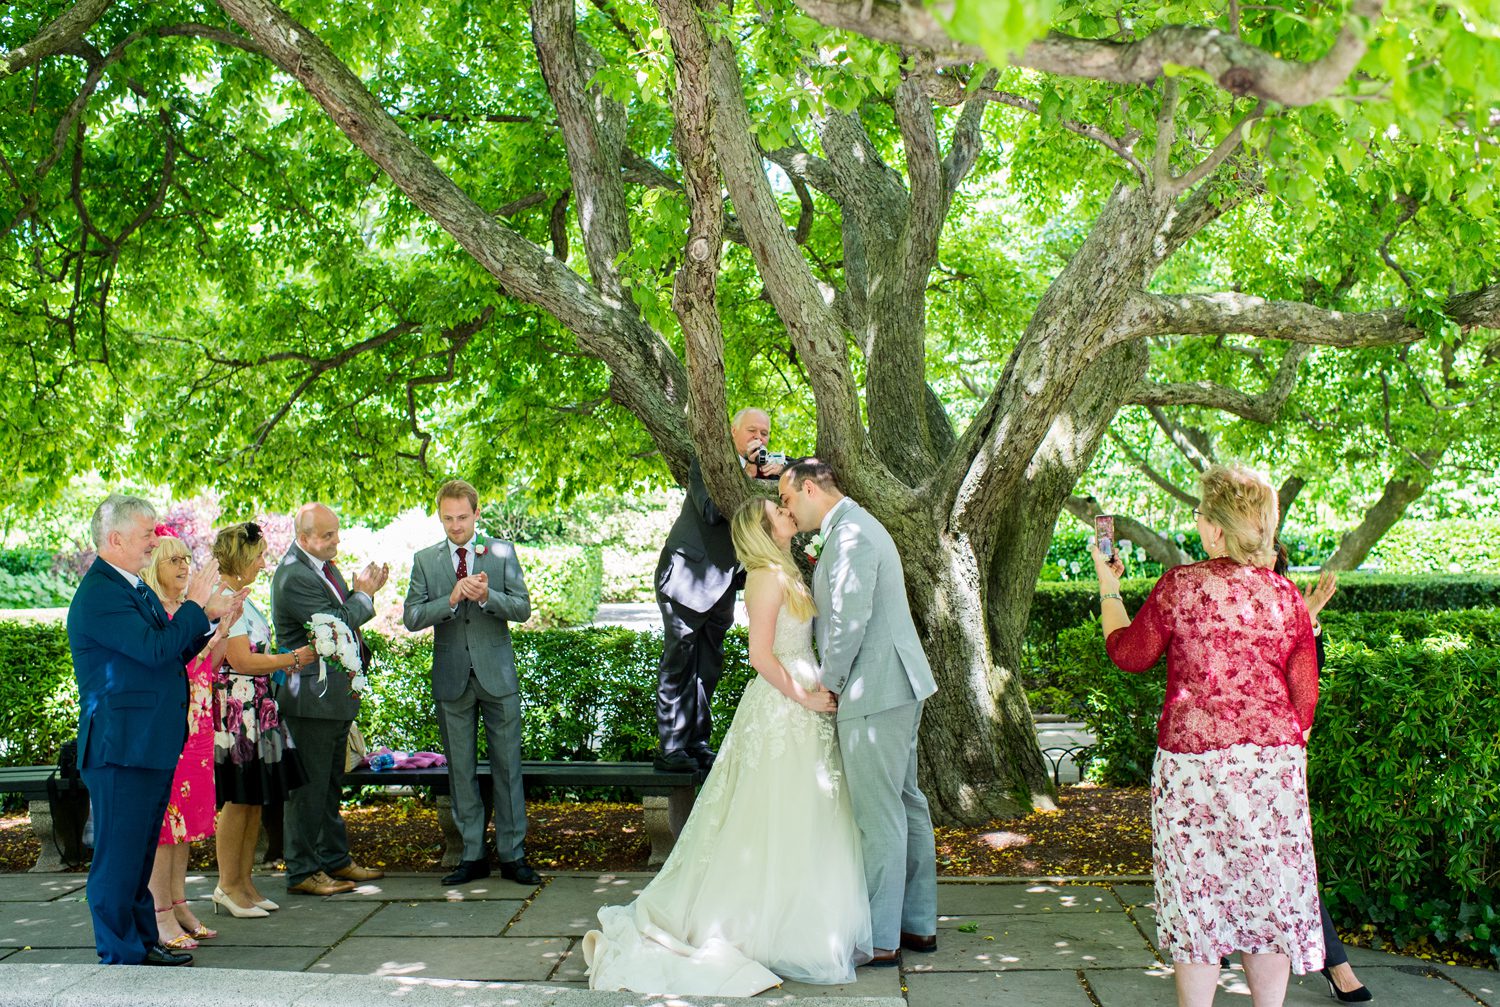 Central Park Wedding Ceremony Locations